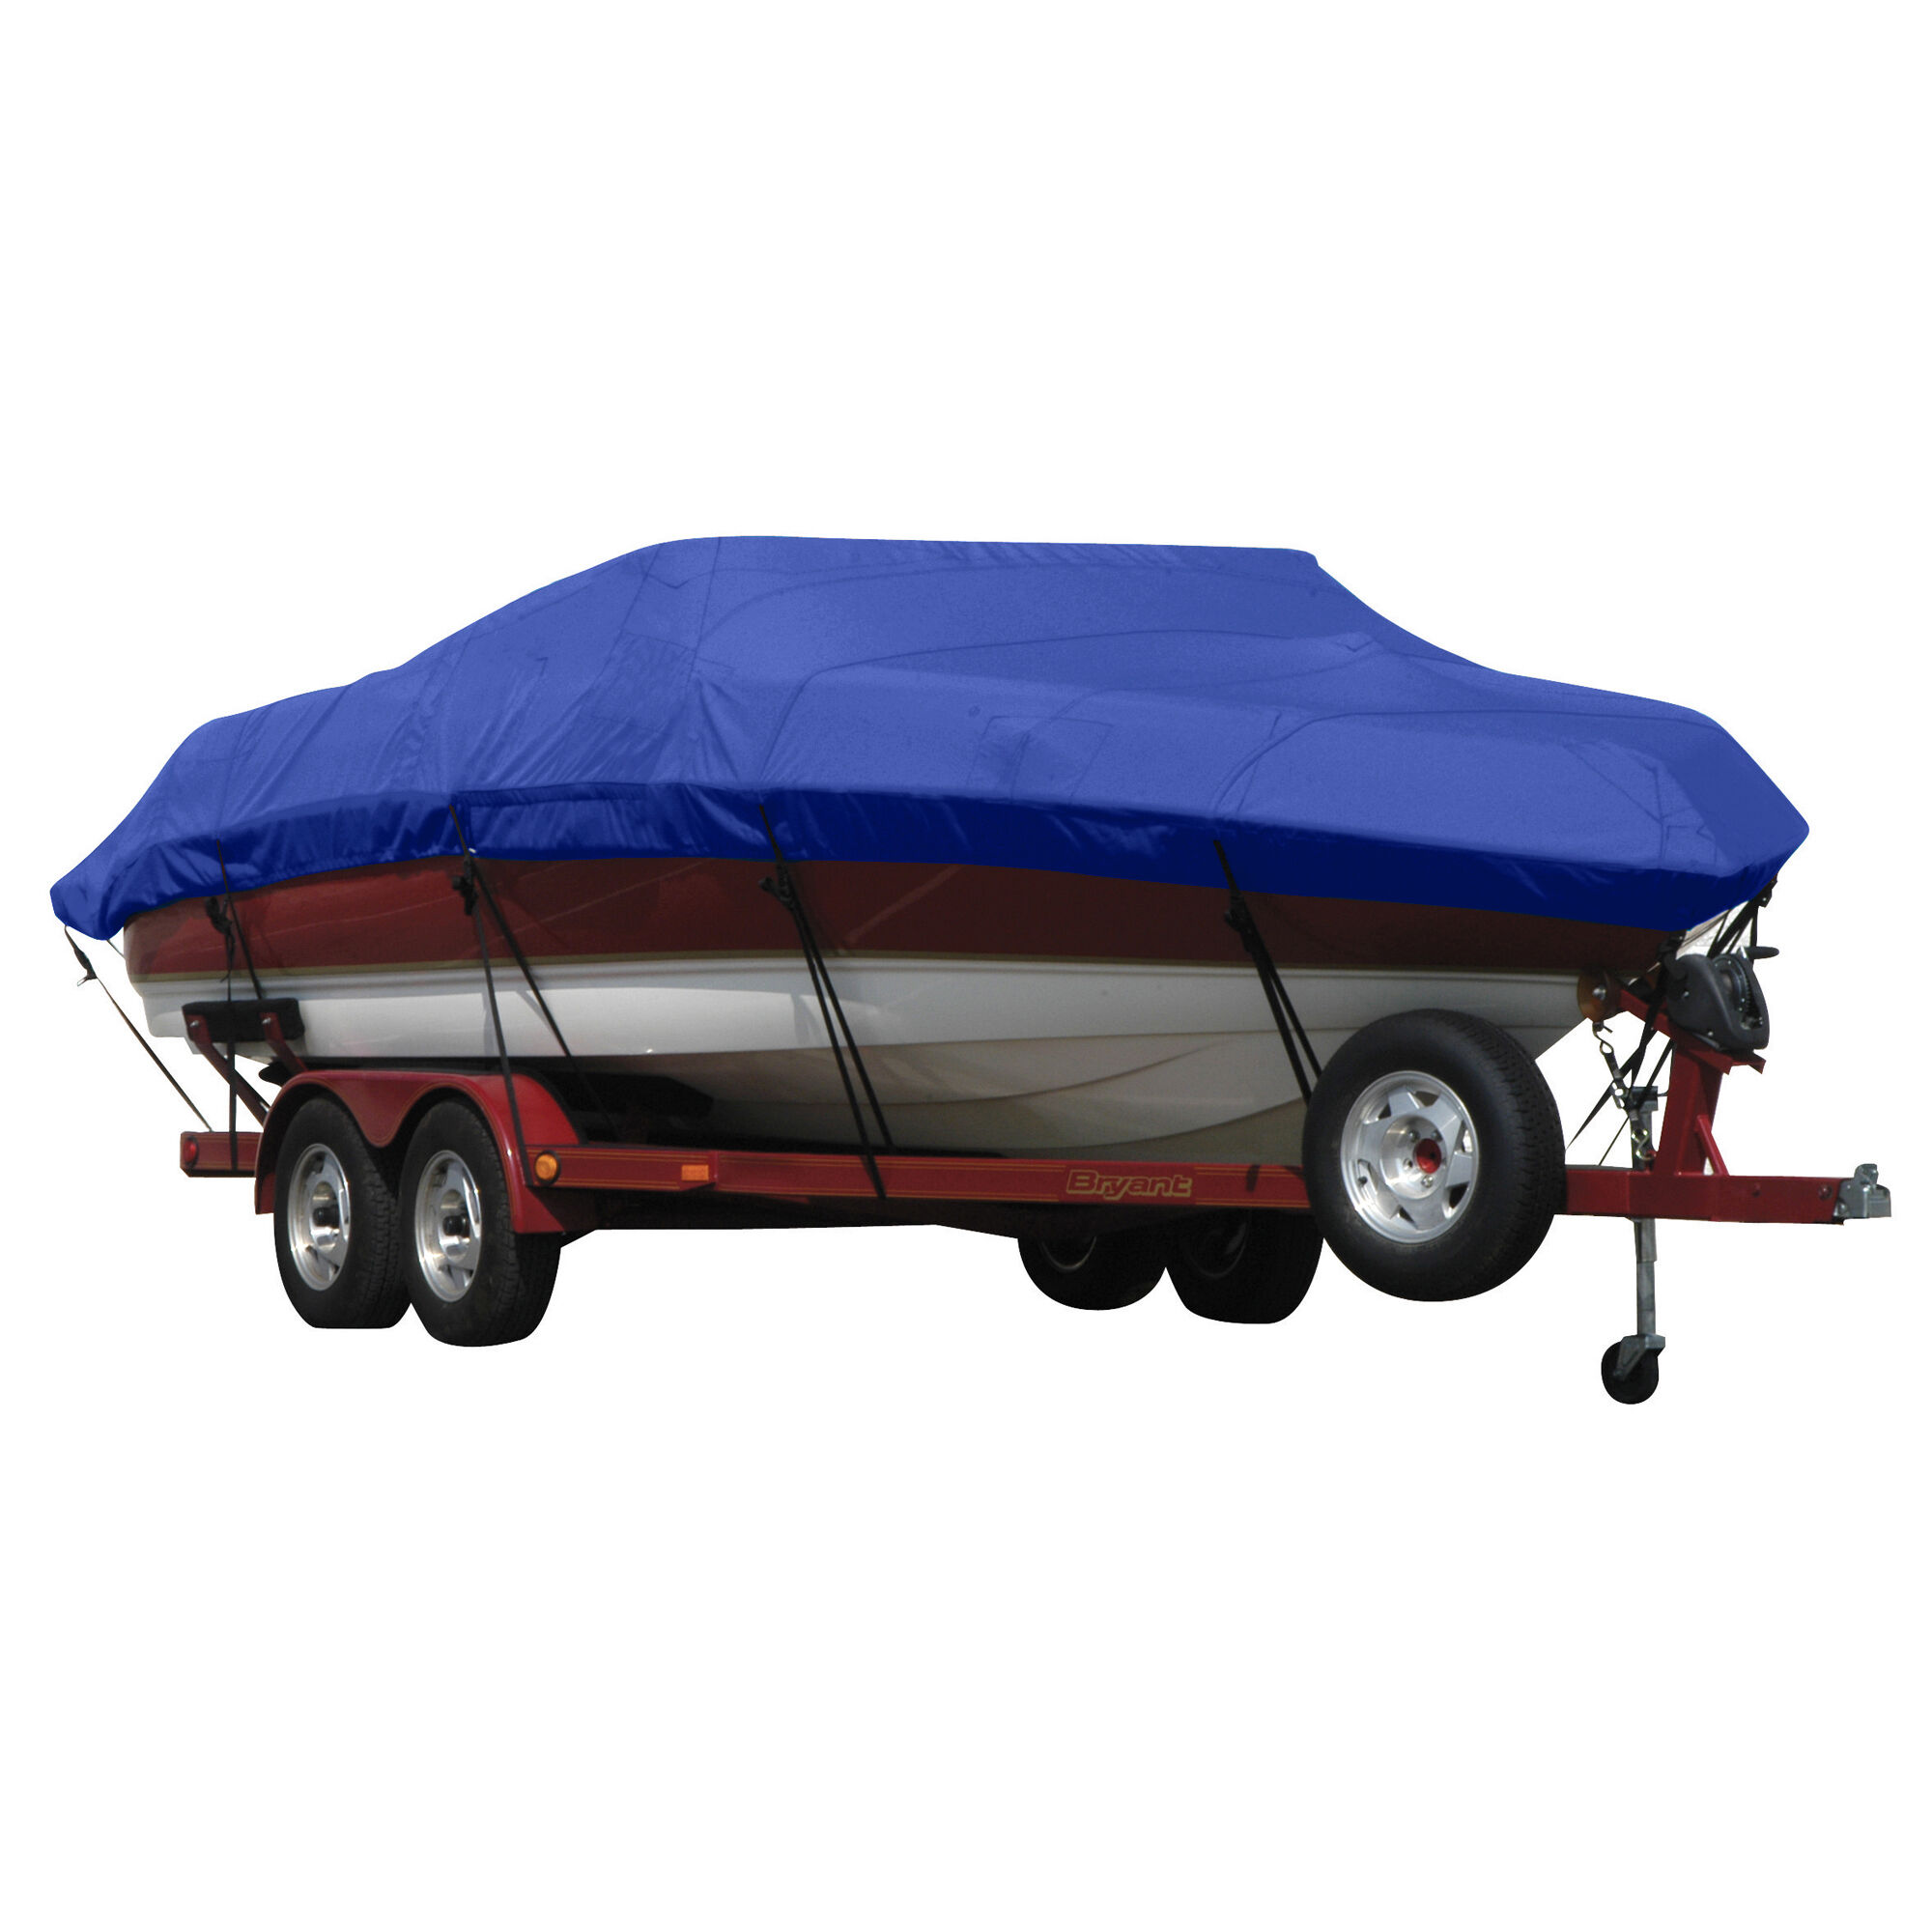 Covermate Exact Fit Sunbrella Boat Cover for Skeeter Zxd 200 Zxd 200 w/ Shield w/ Port Troll Mtr O/B. Ocean Blue Acrylic